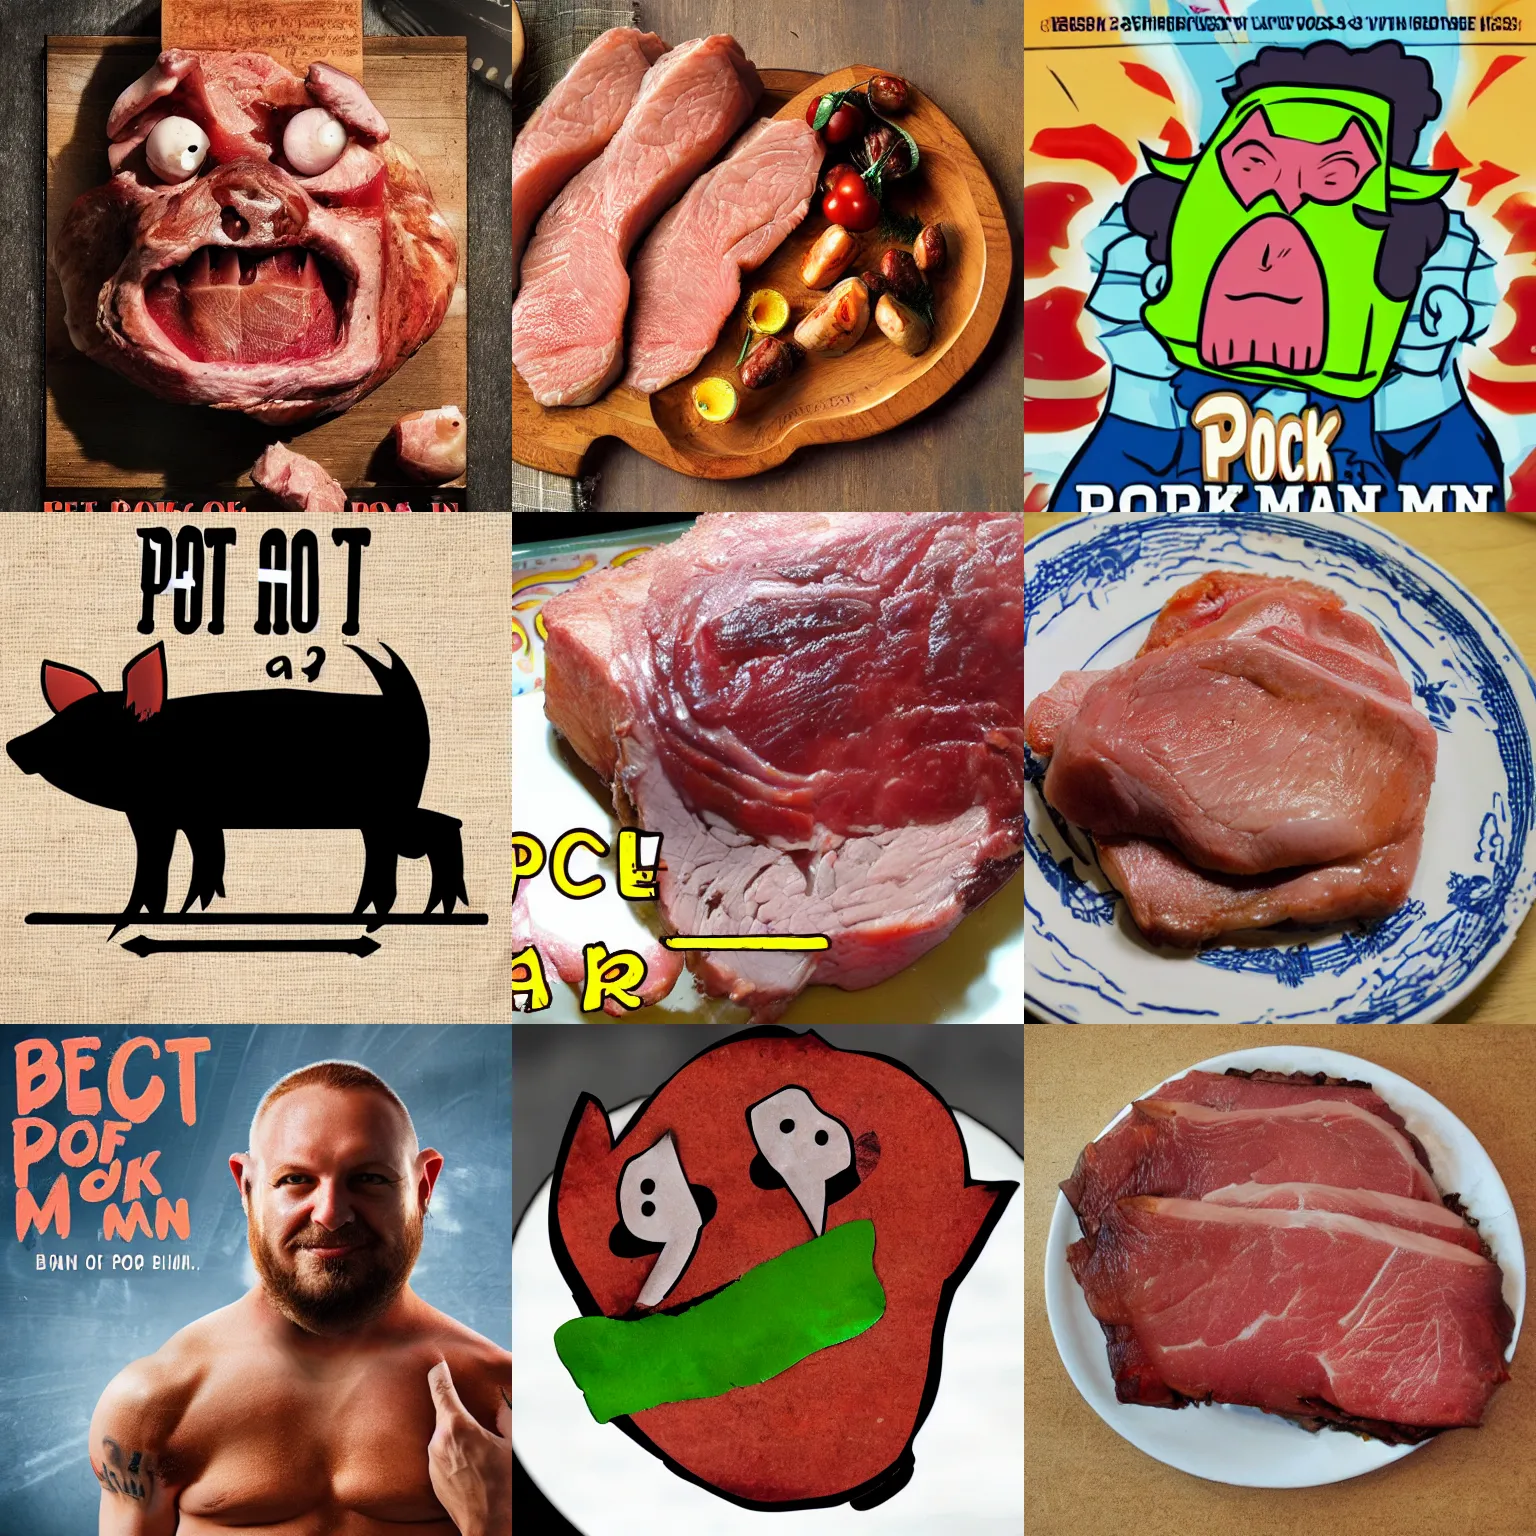 Prompt: piece of pork-man